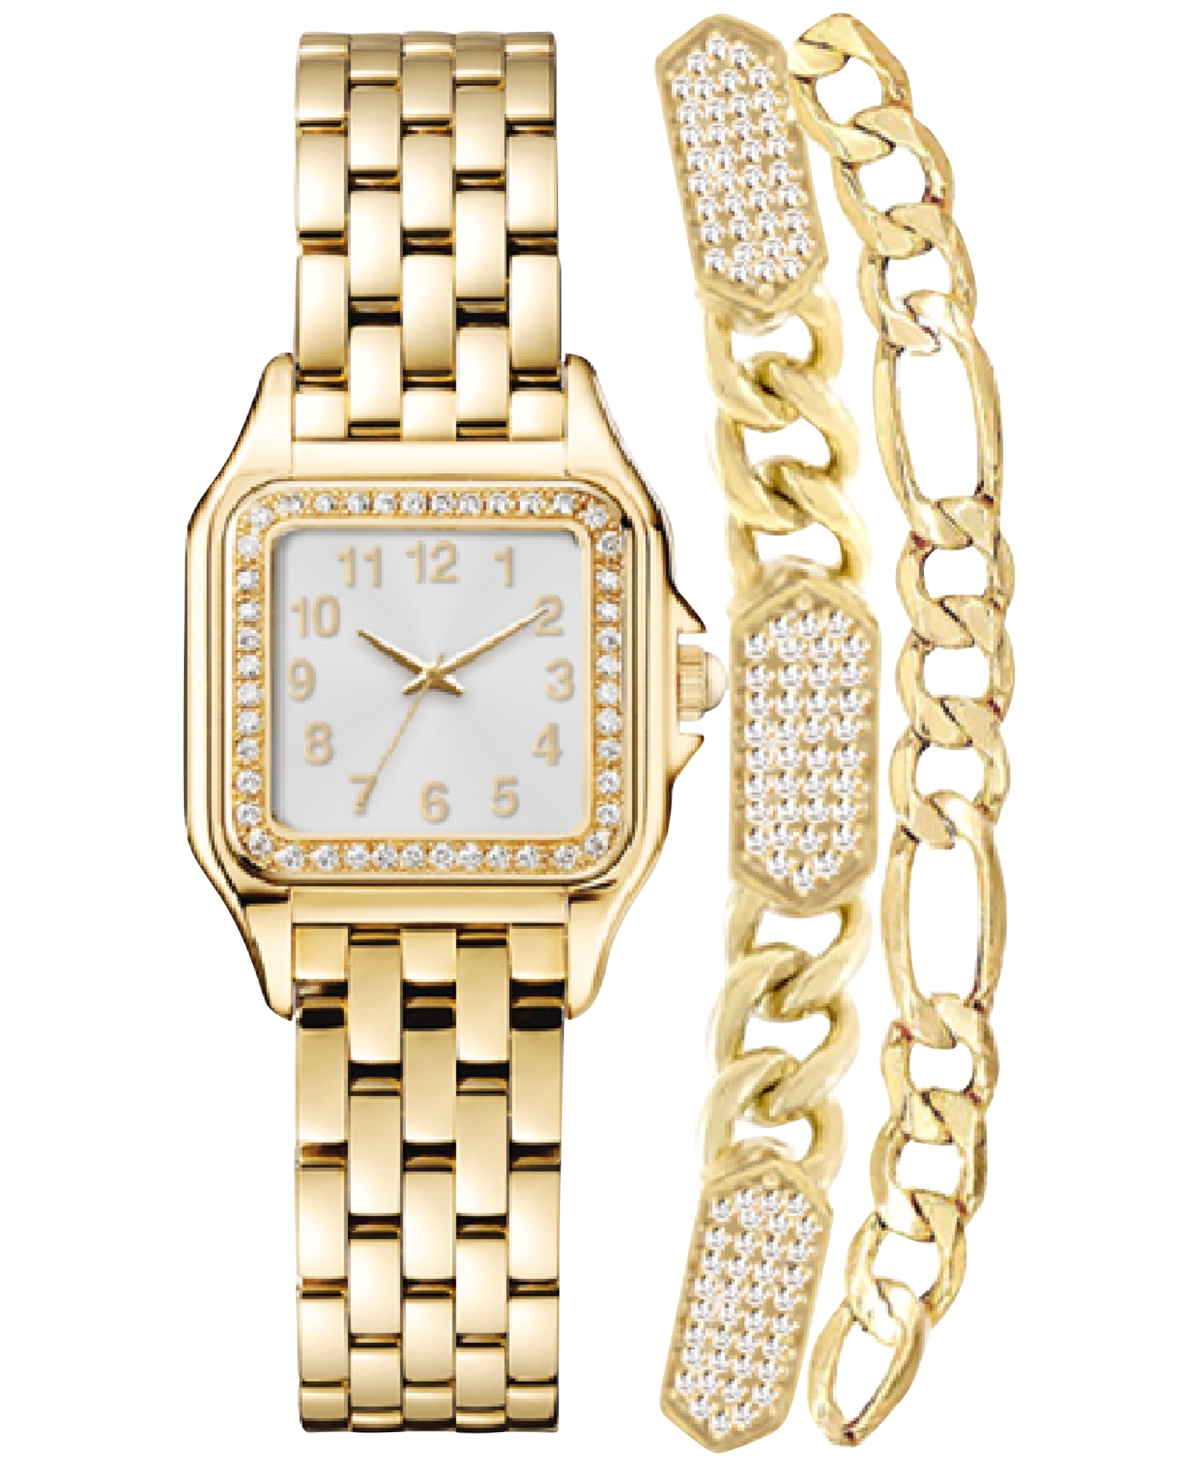 Women's Gold-Tone Bracelet Watch Gift Set 26mm - Gold